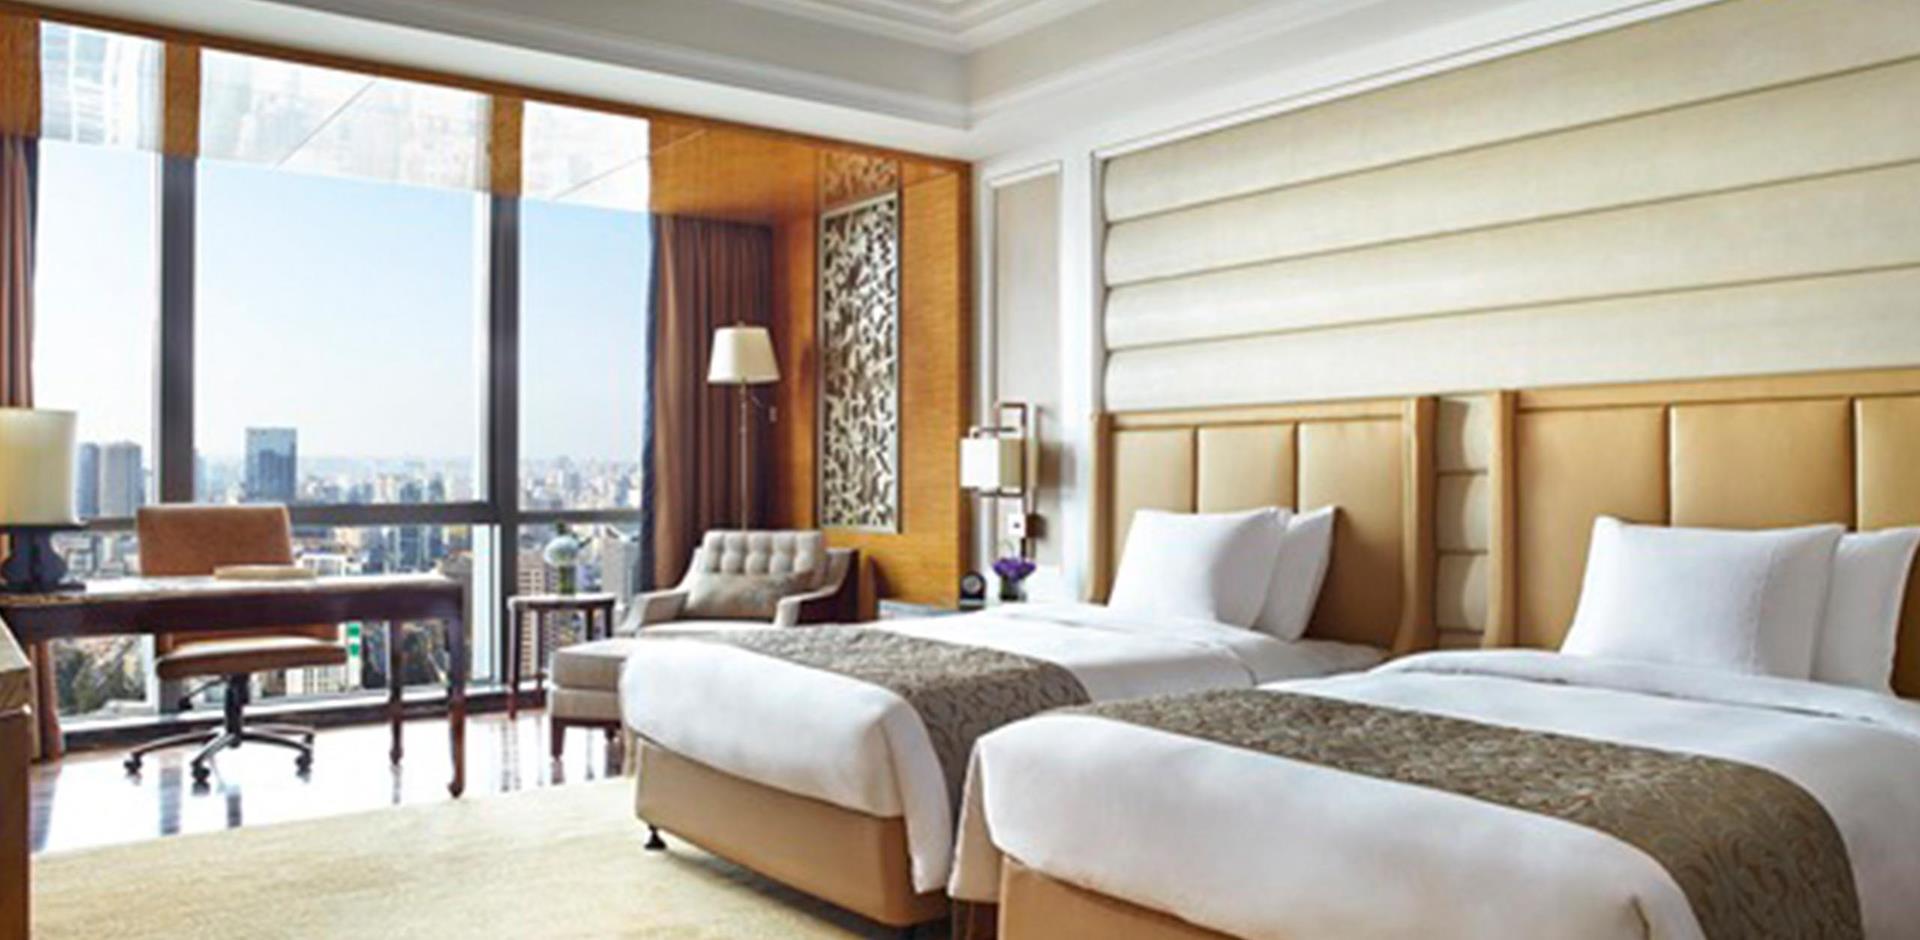 Bedroom, The Ritz-Carlton Chengdu, China